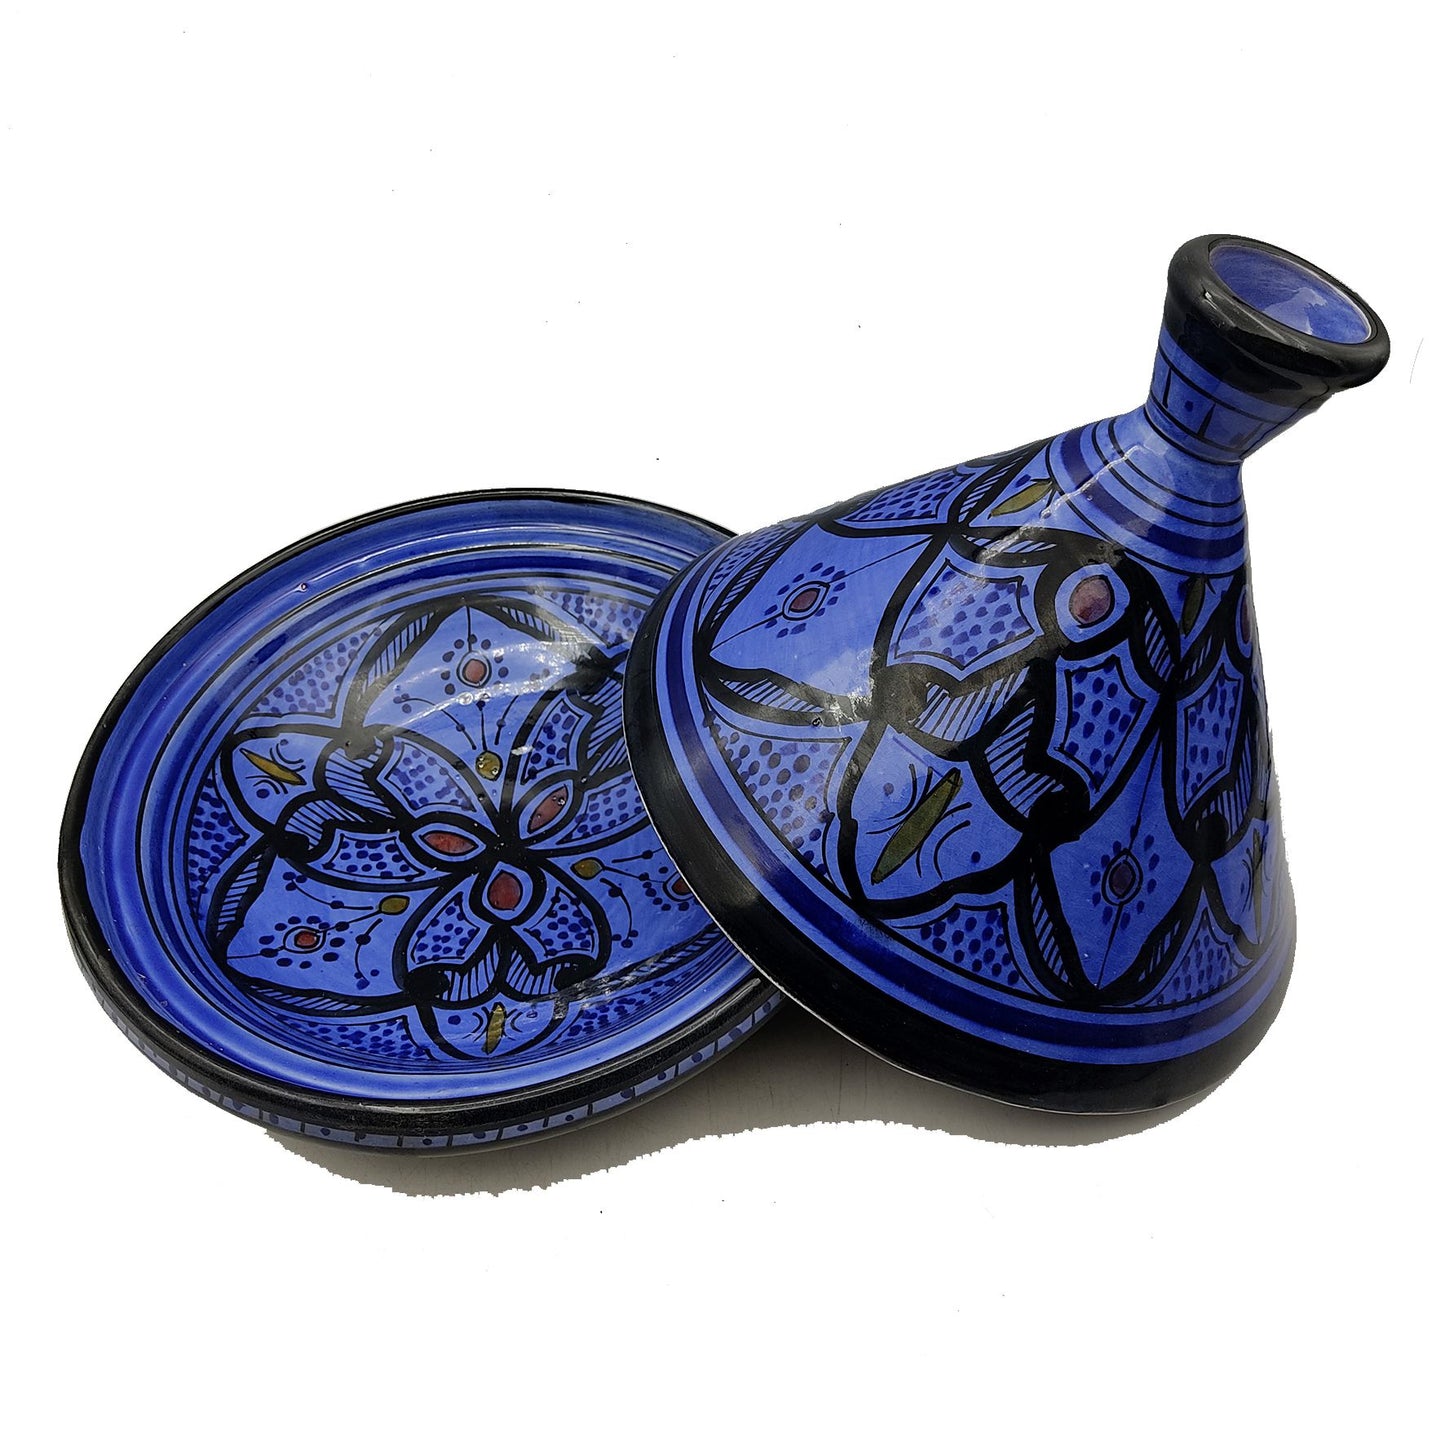 Decoratieve Tajine Keramiek Terracotta Marokko Marokkaans Etnisch handbeschilderd 2302221113